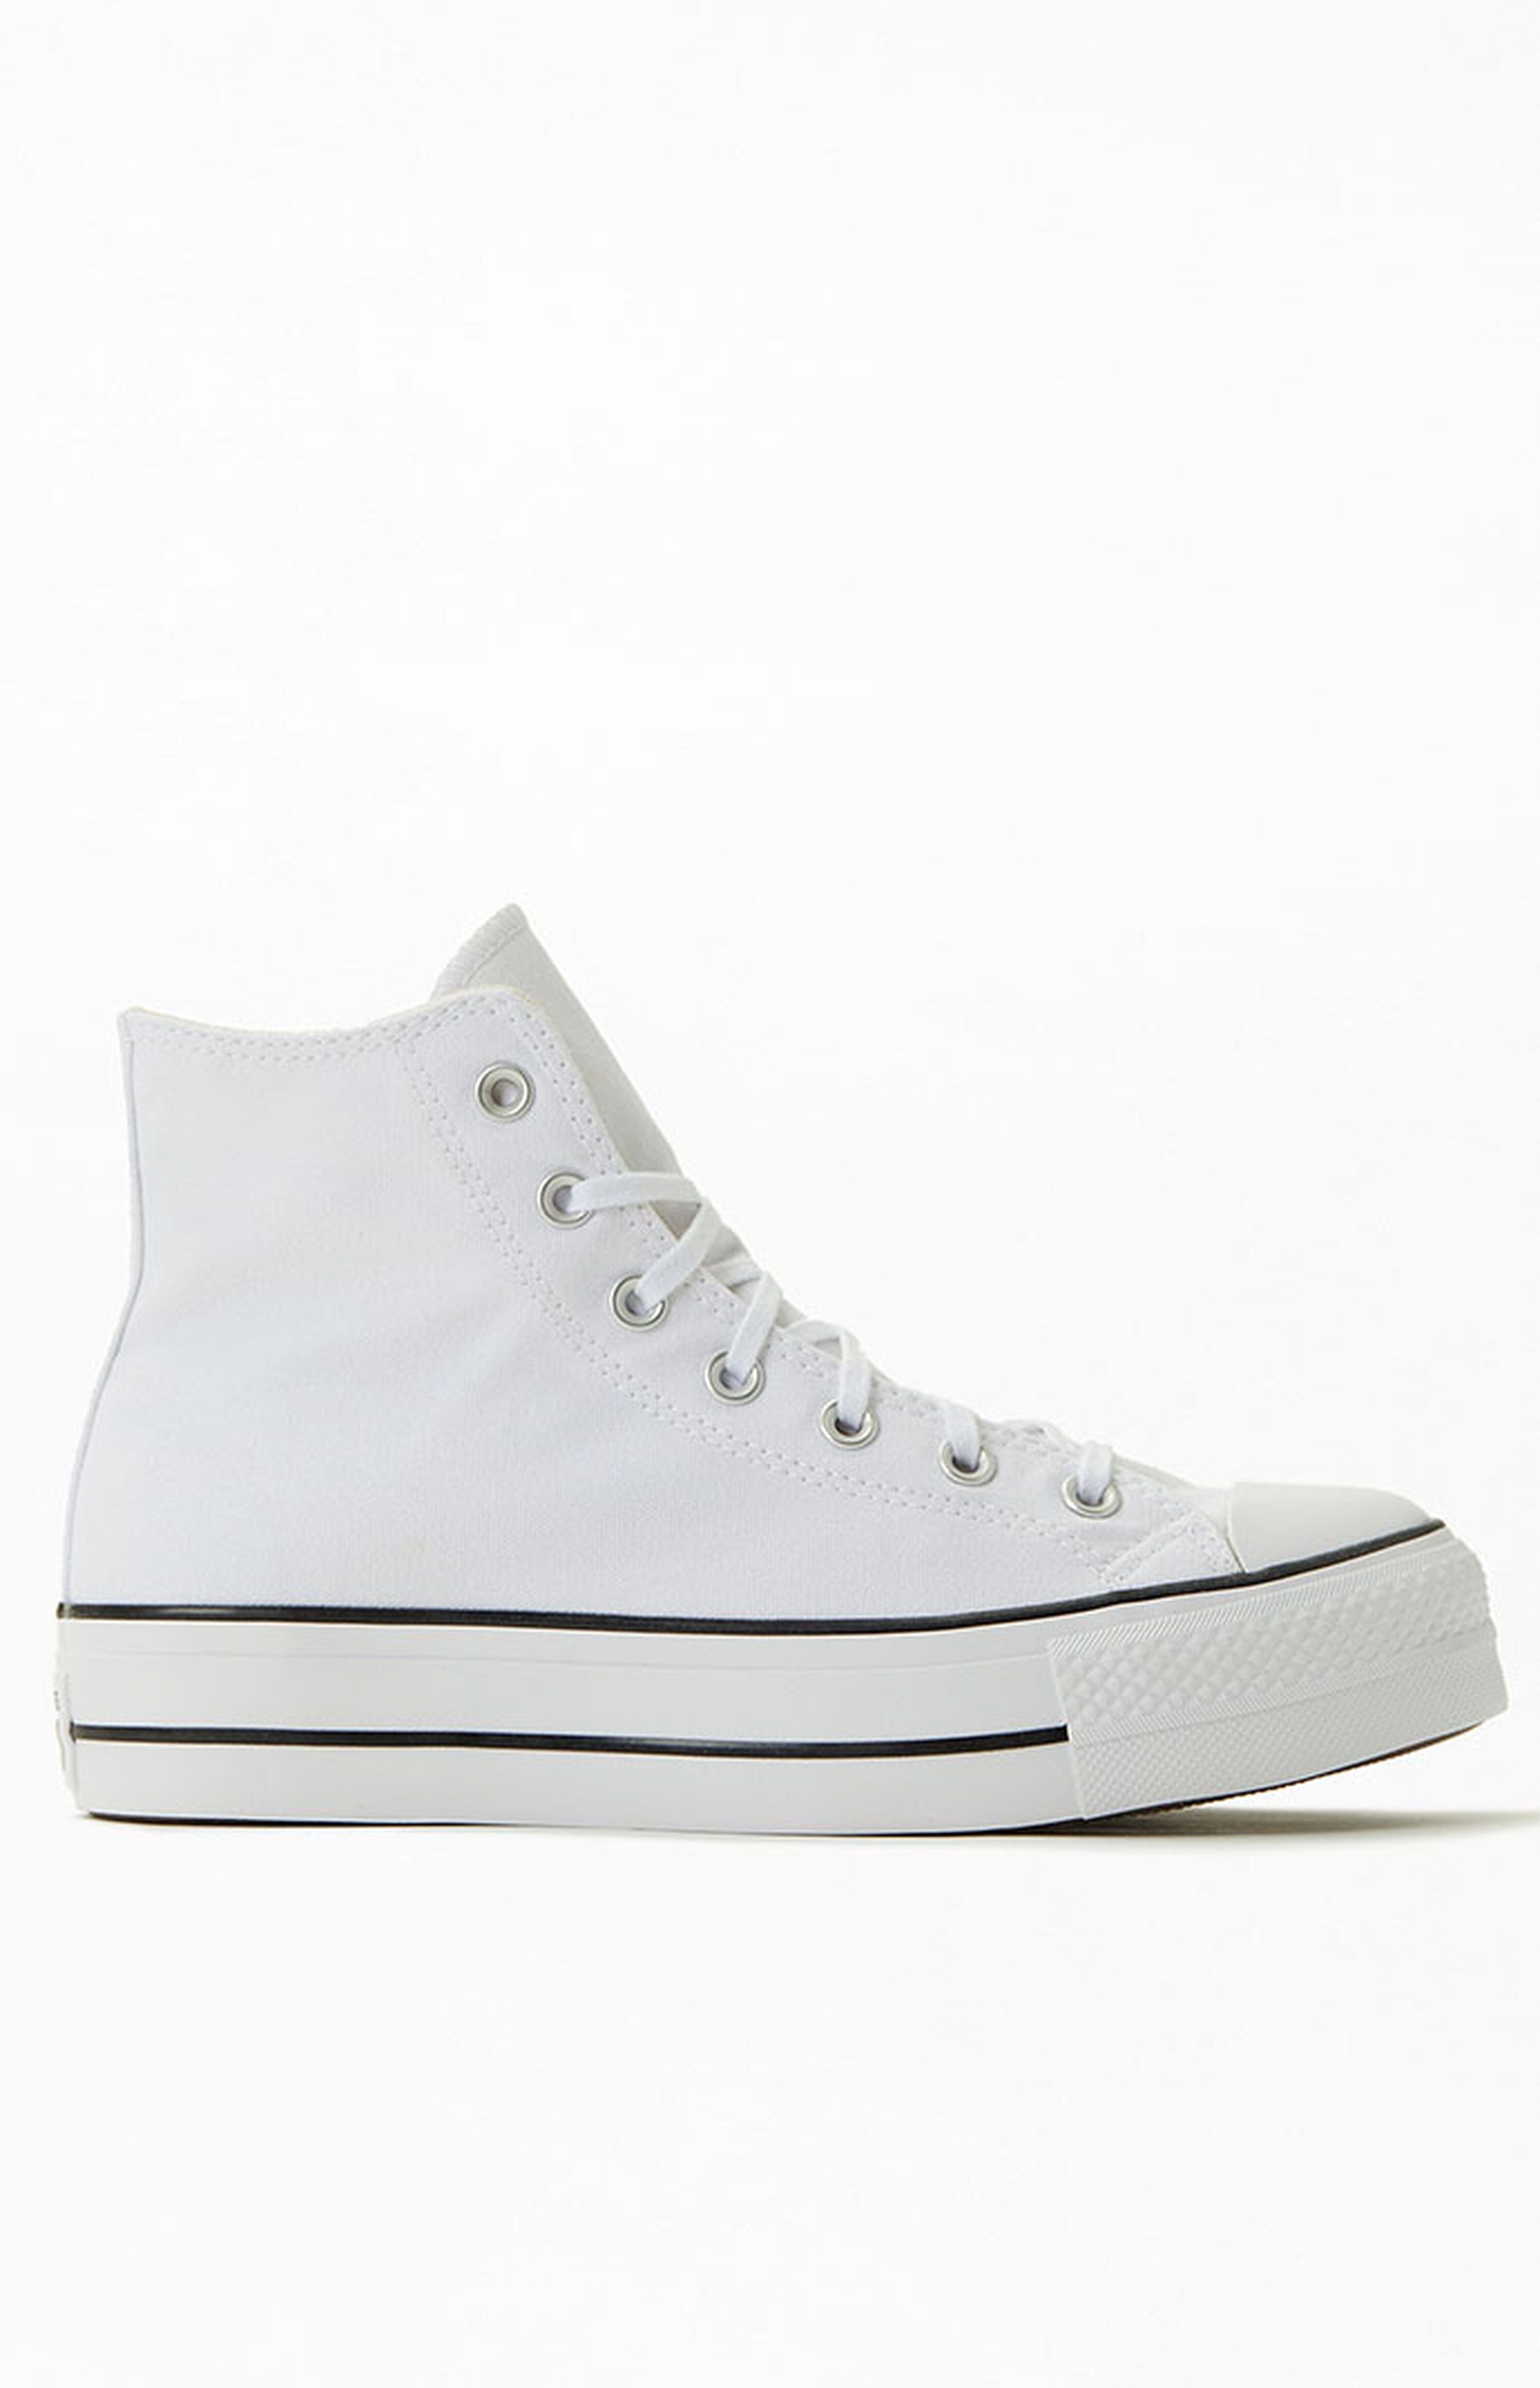 Converse White Chuck Taylor Platform High Top Sneakers | PacSun